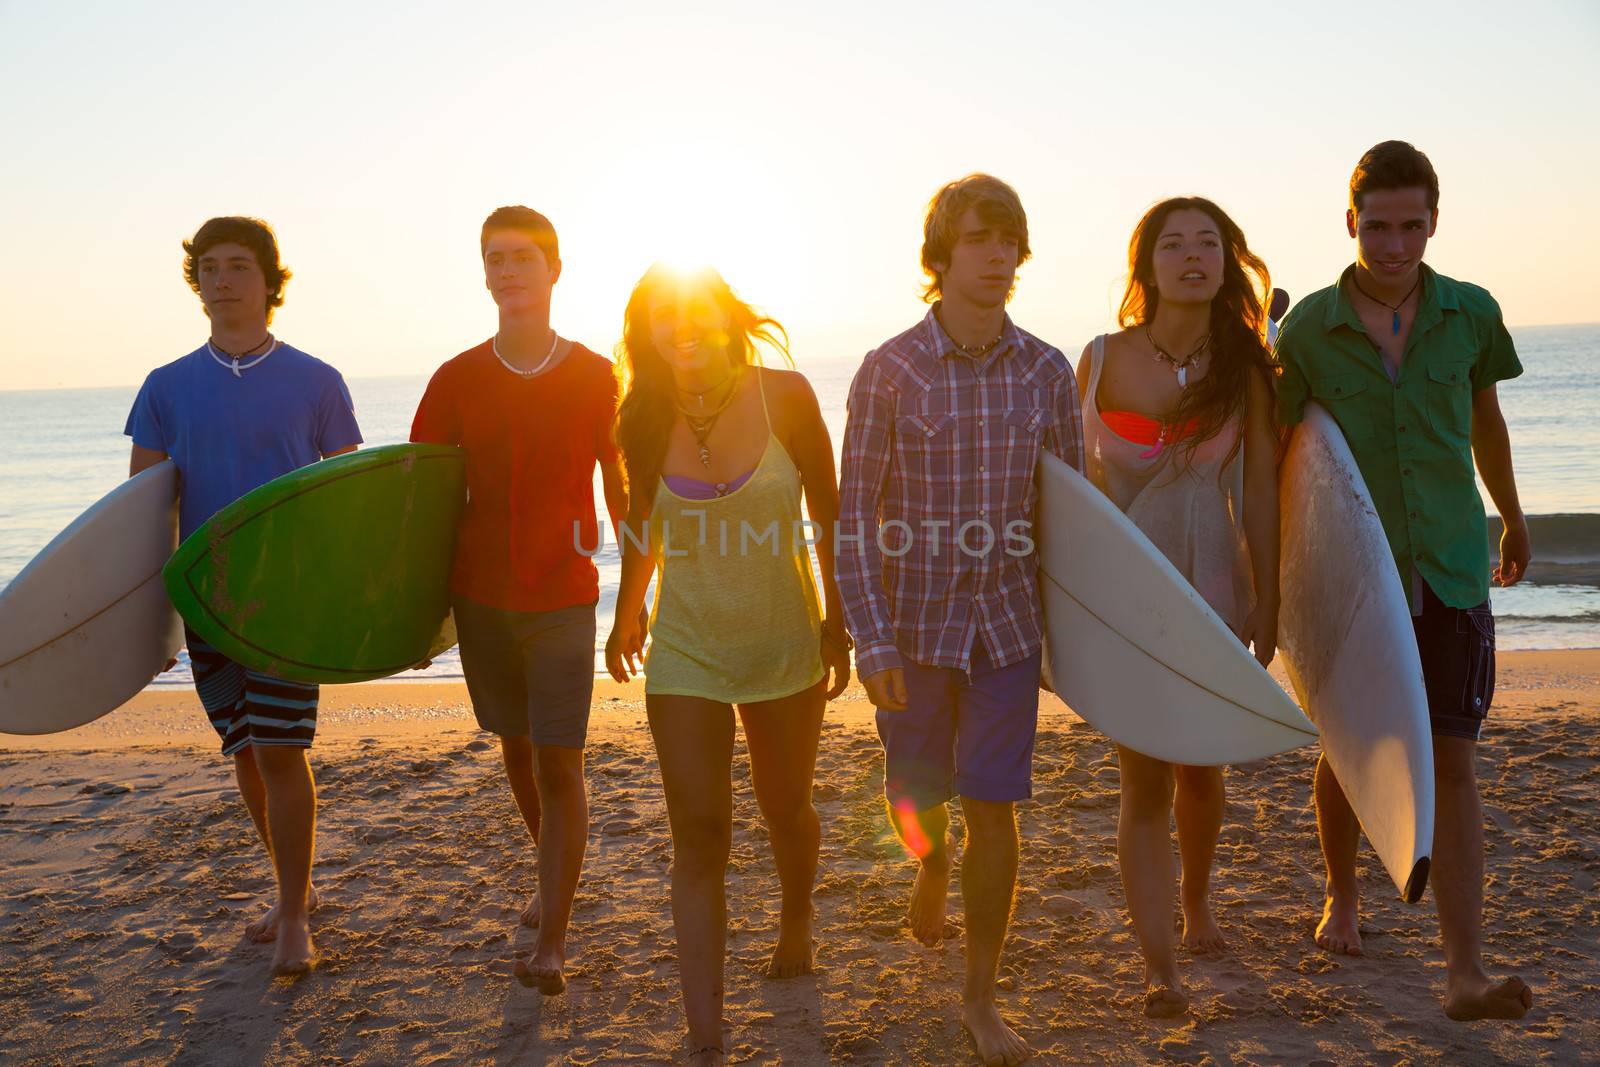 Surfers boys and girls group walking on beach by lunamarina